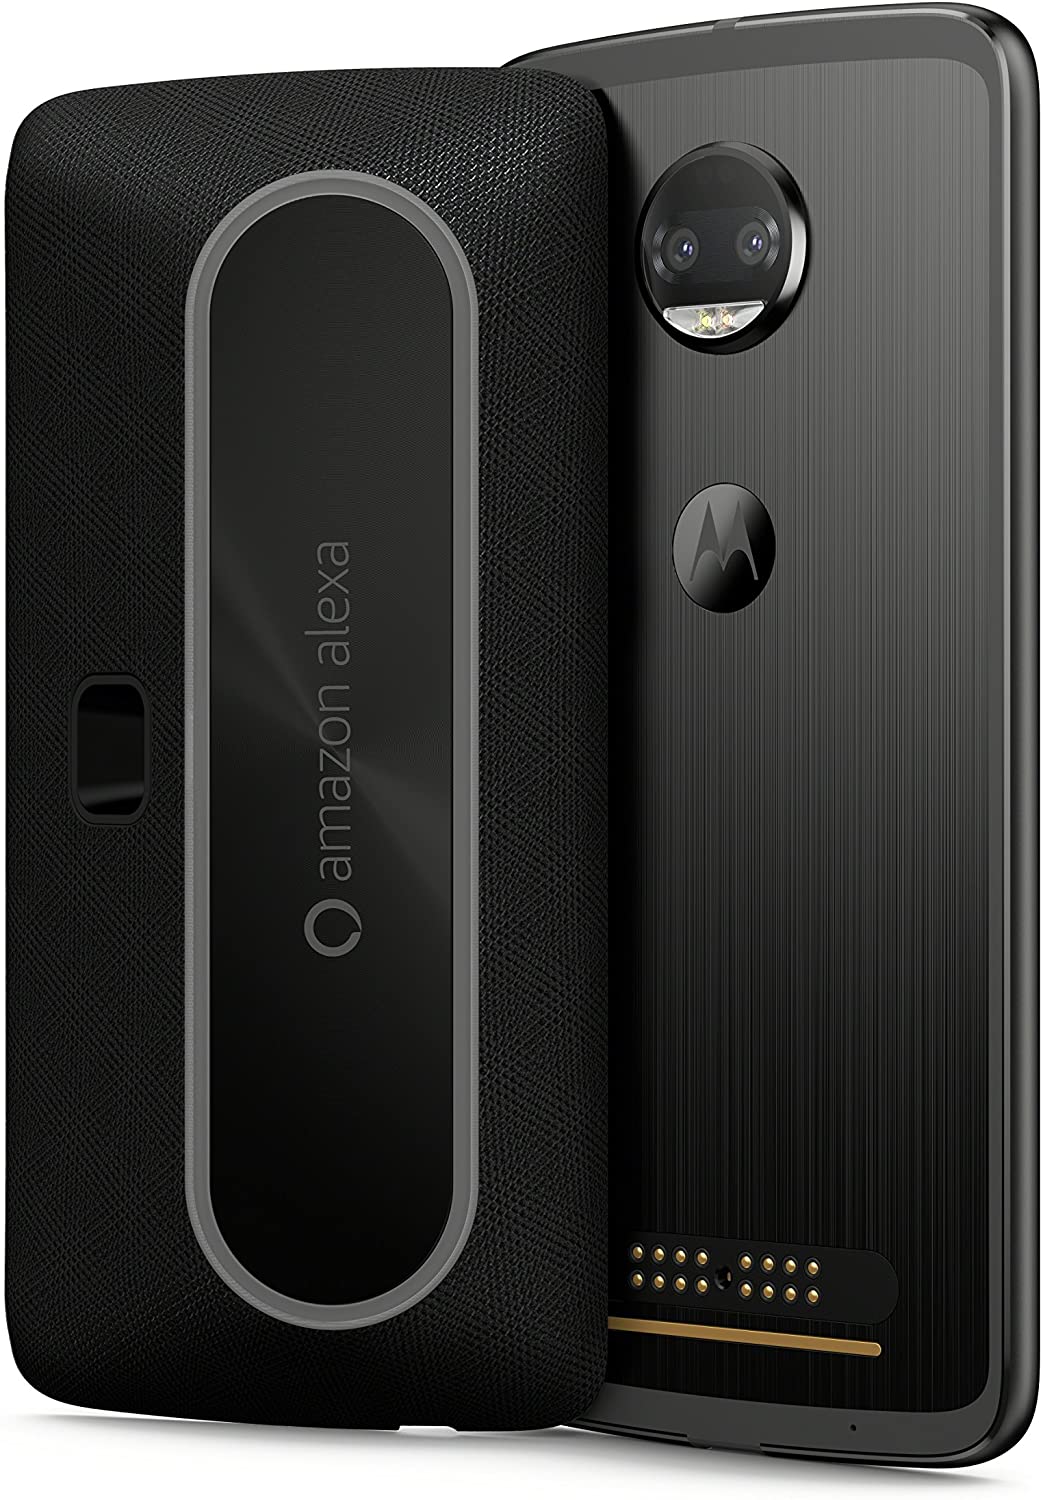 Motorola Moto Smart Speaker with Amazon Alexa for Moto Z, Moto Z Play - Black (New)